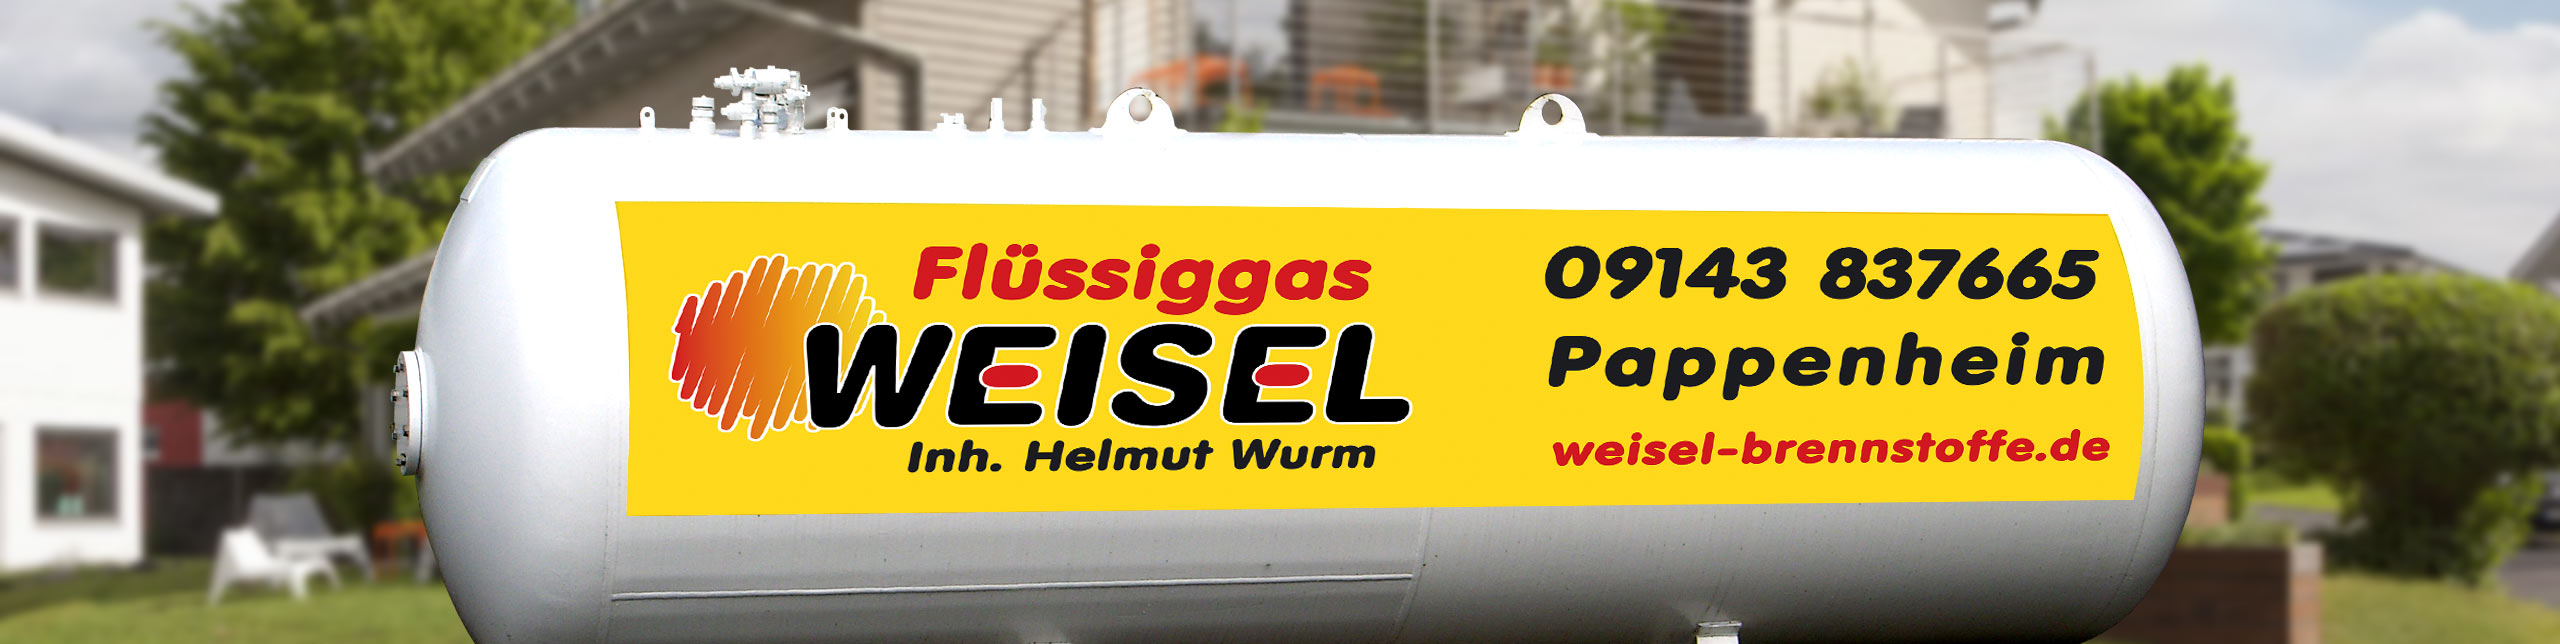 (c) Weisel-brennstoffe.de